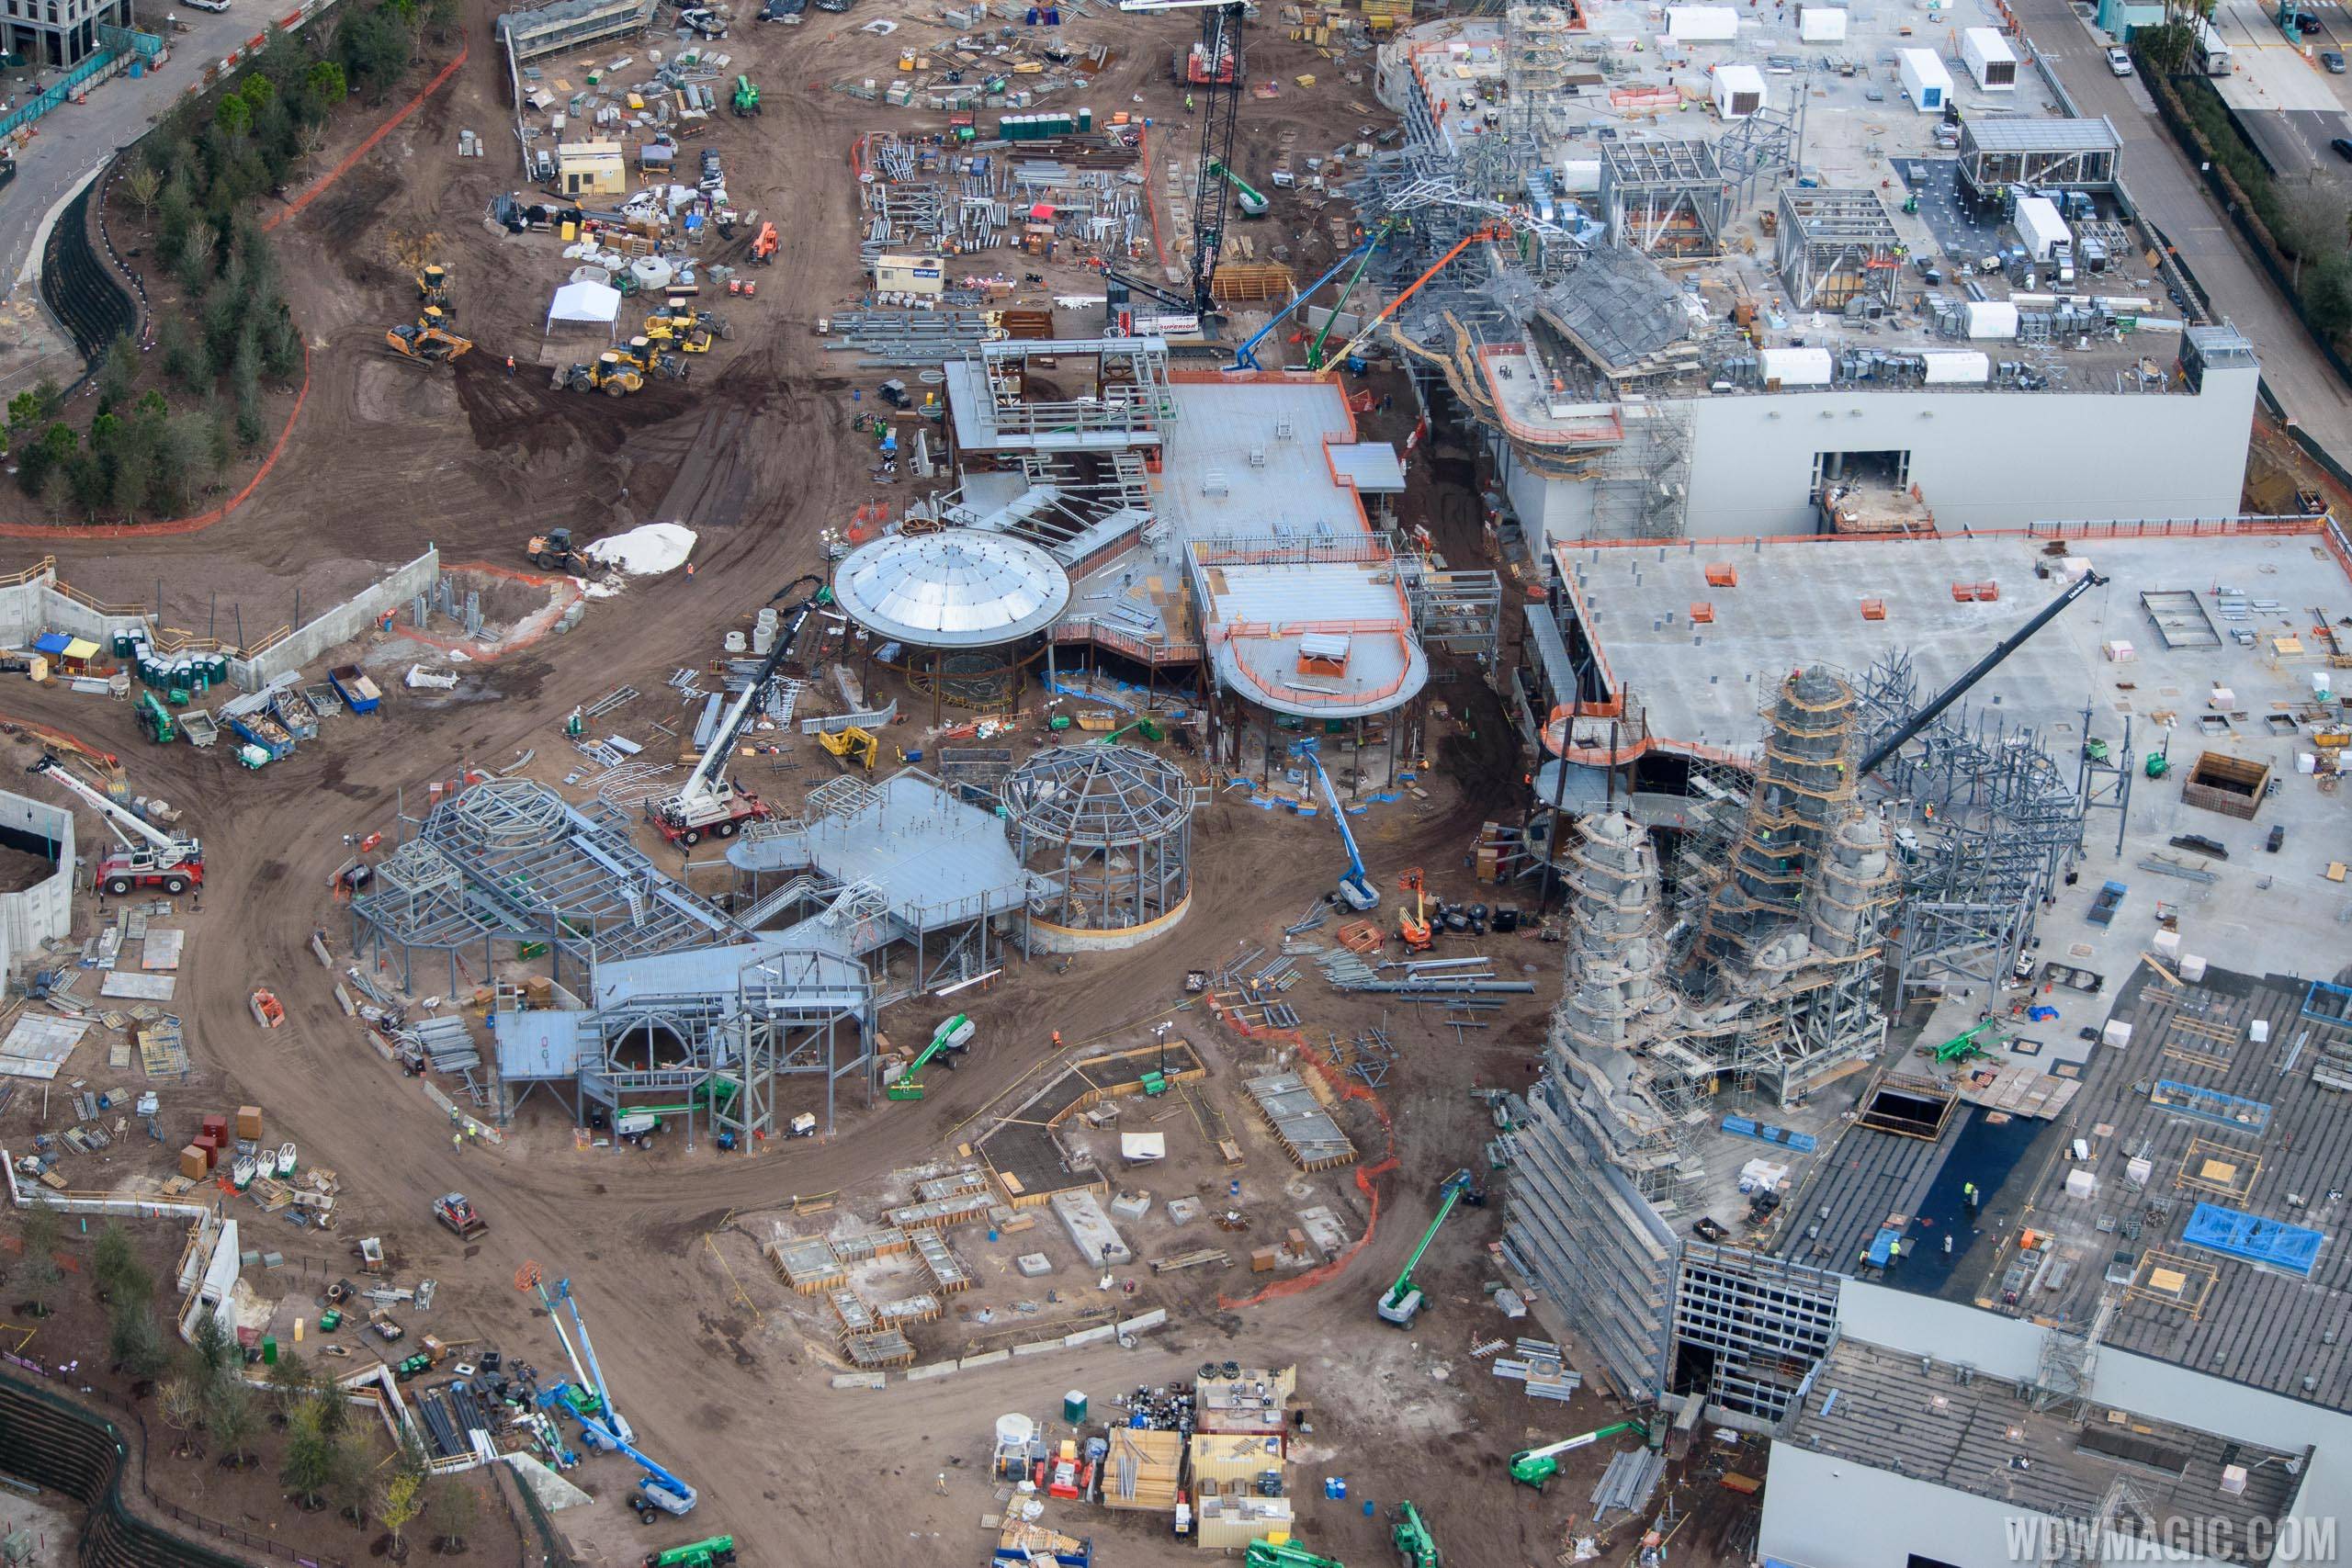 PHOTOS - Birds-eye view of Star Wars Galaxy's Edge construction at Disney's Hollywood Studios